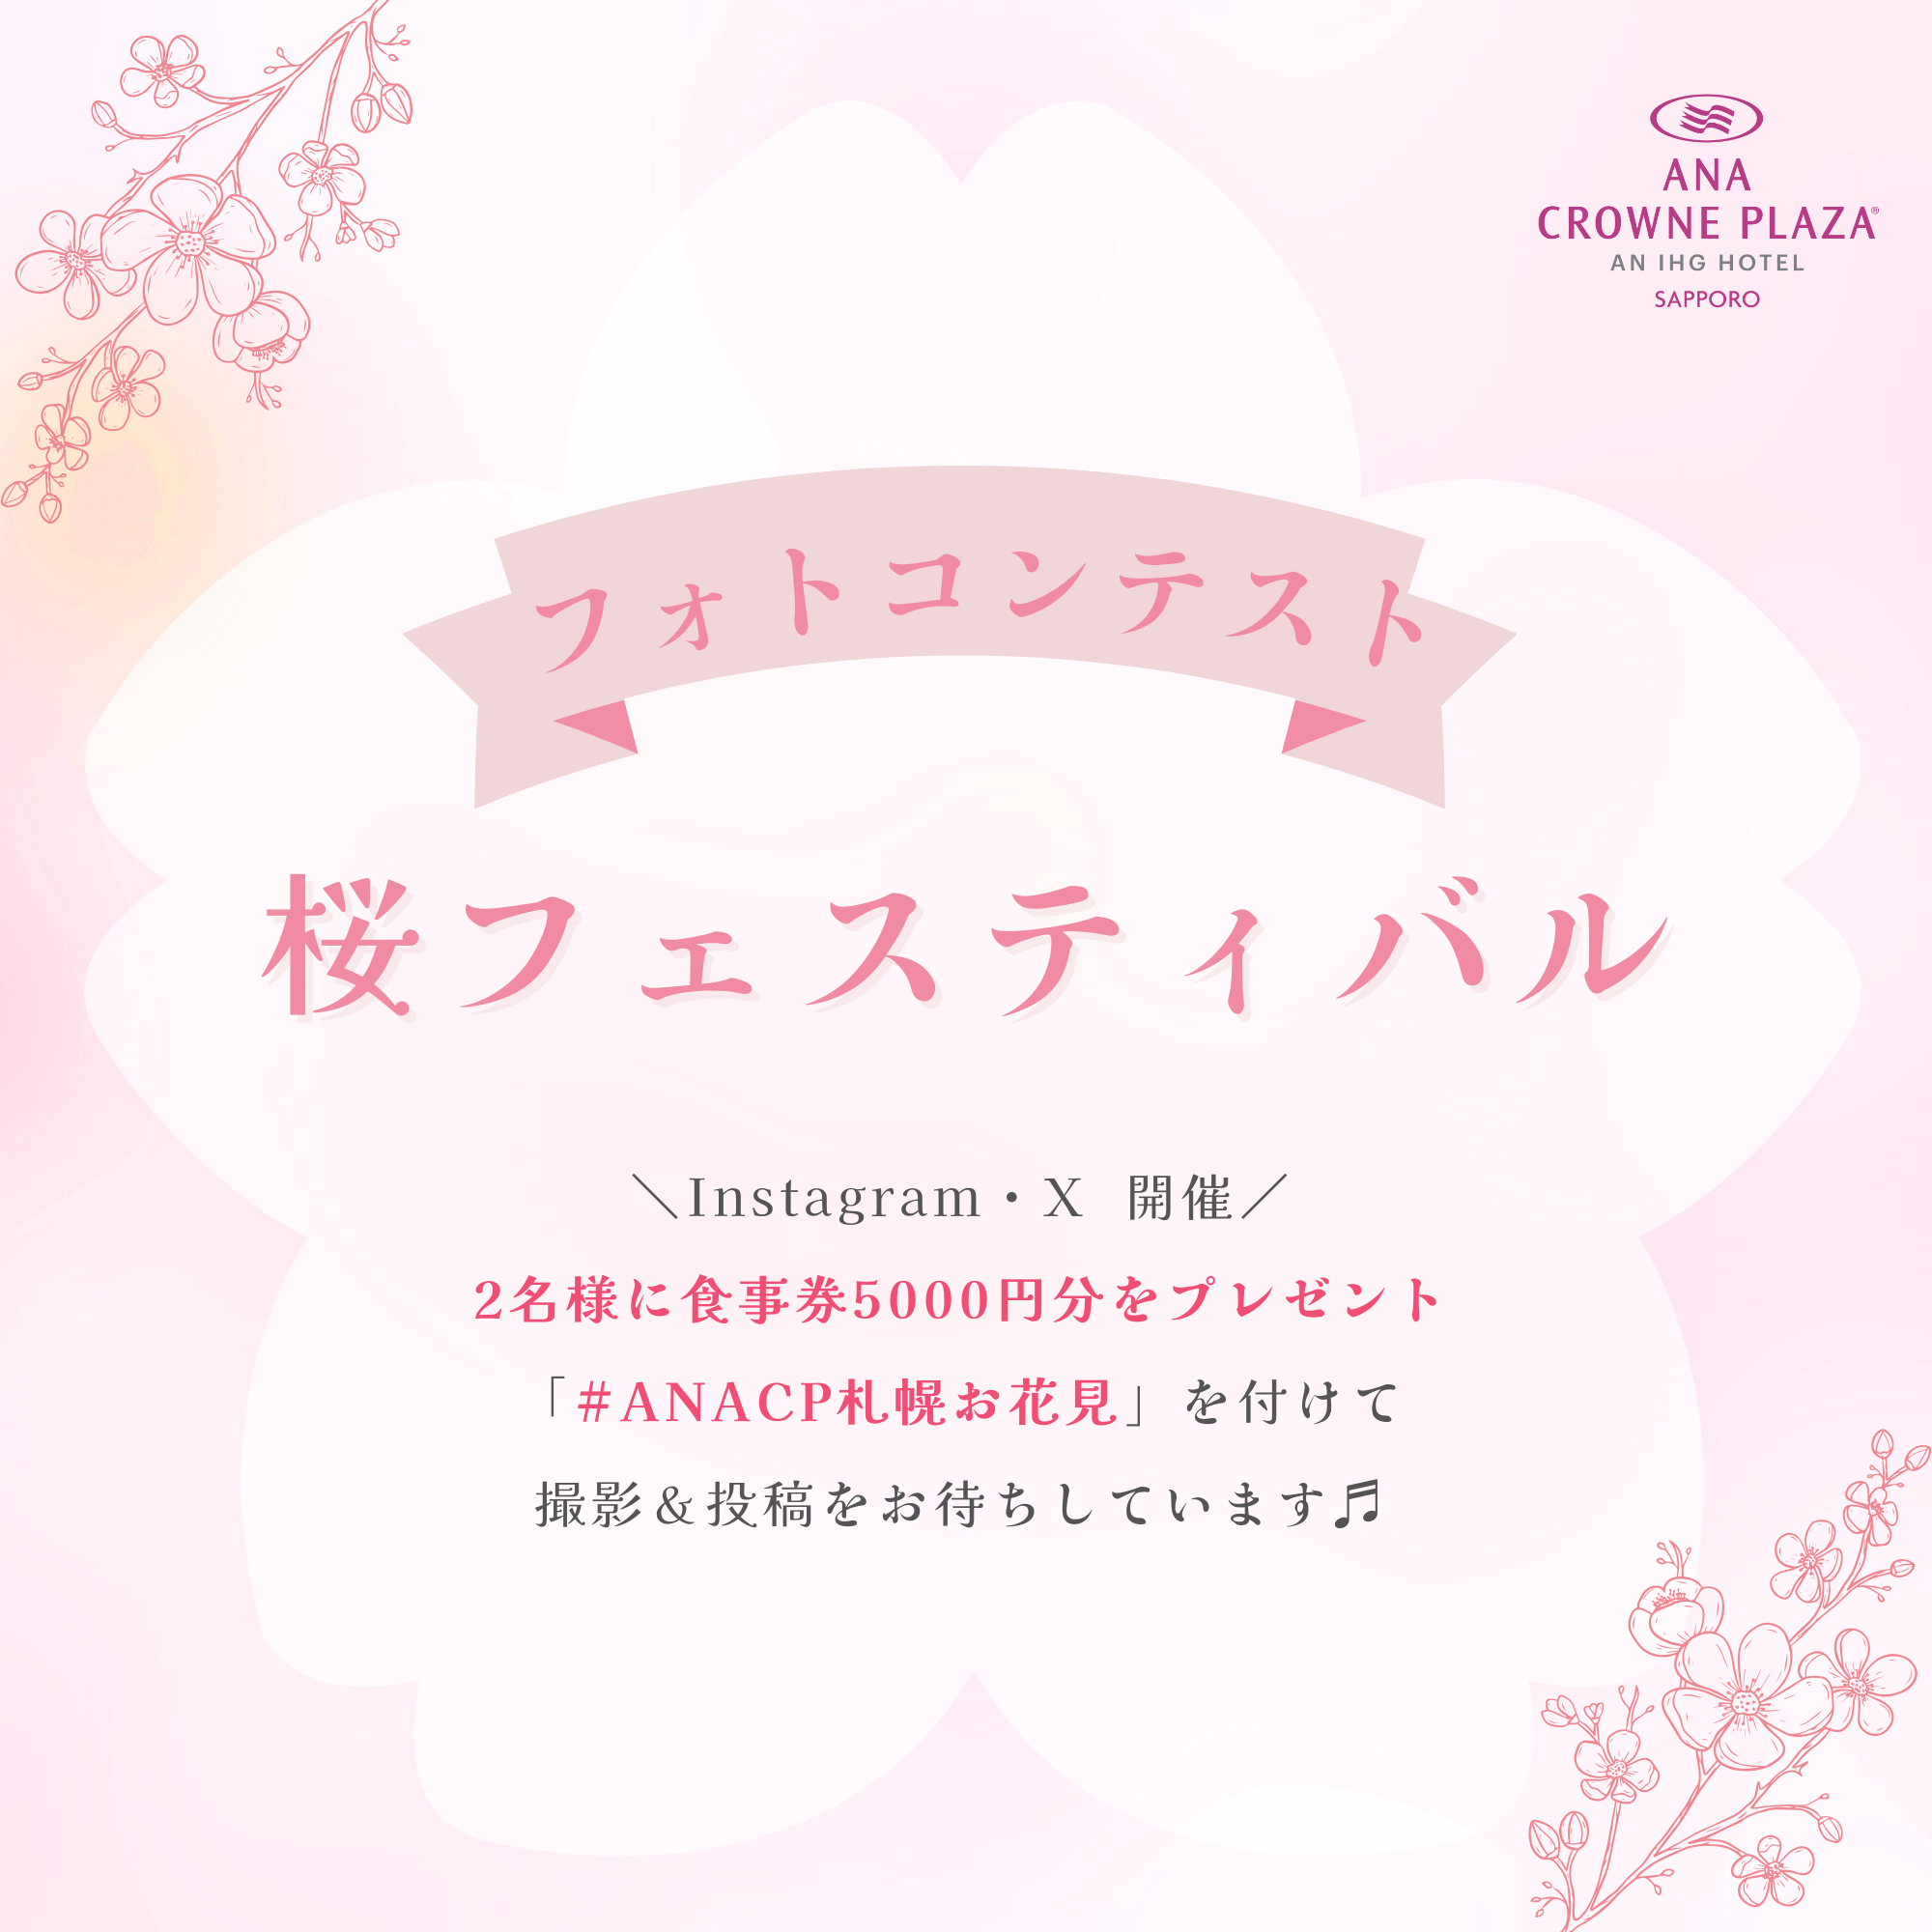 ANAクラウンプラザホテル札幌の『桜フォトコンテスト』